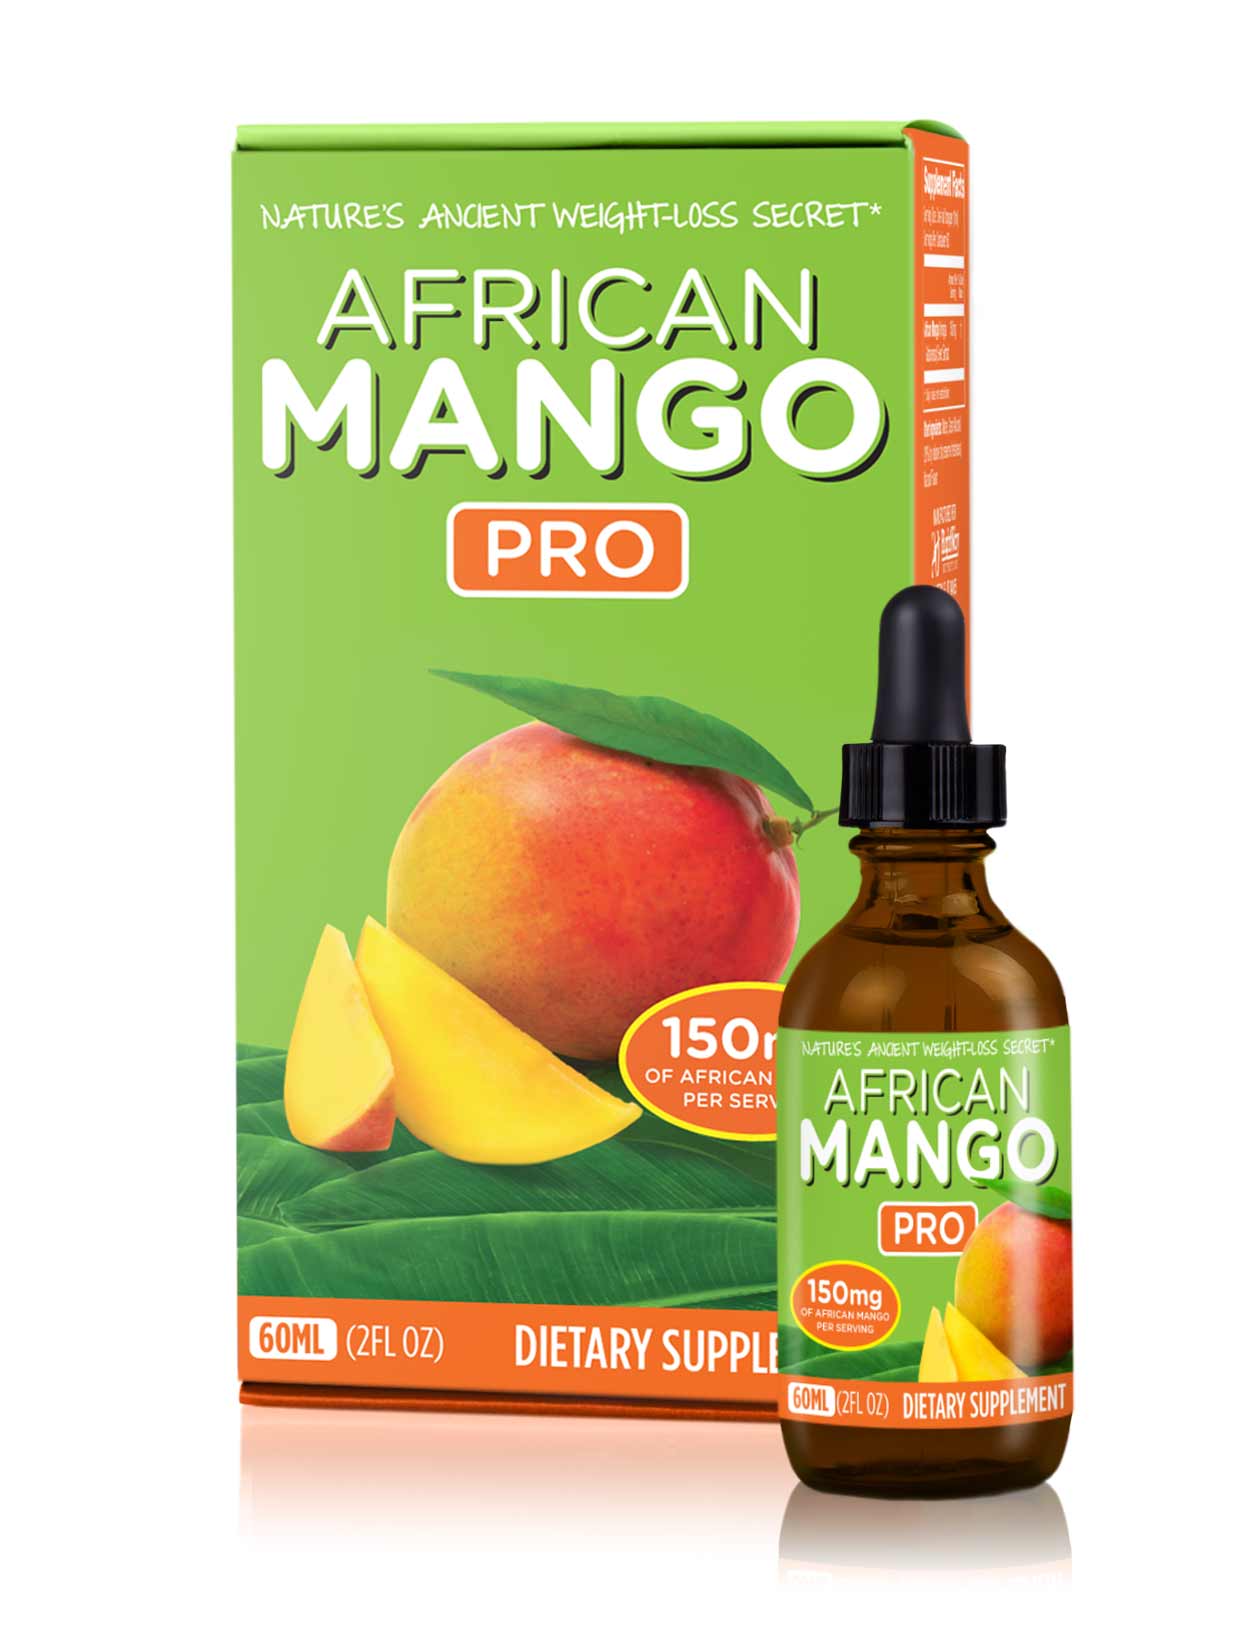 African Mango Pro Box and Bottle